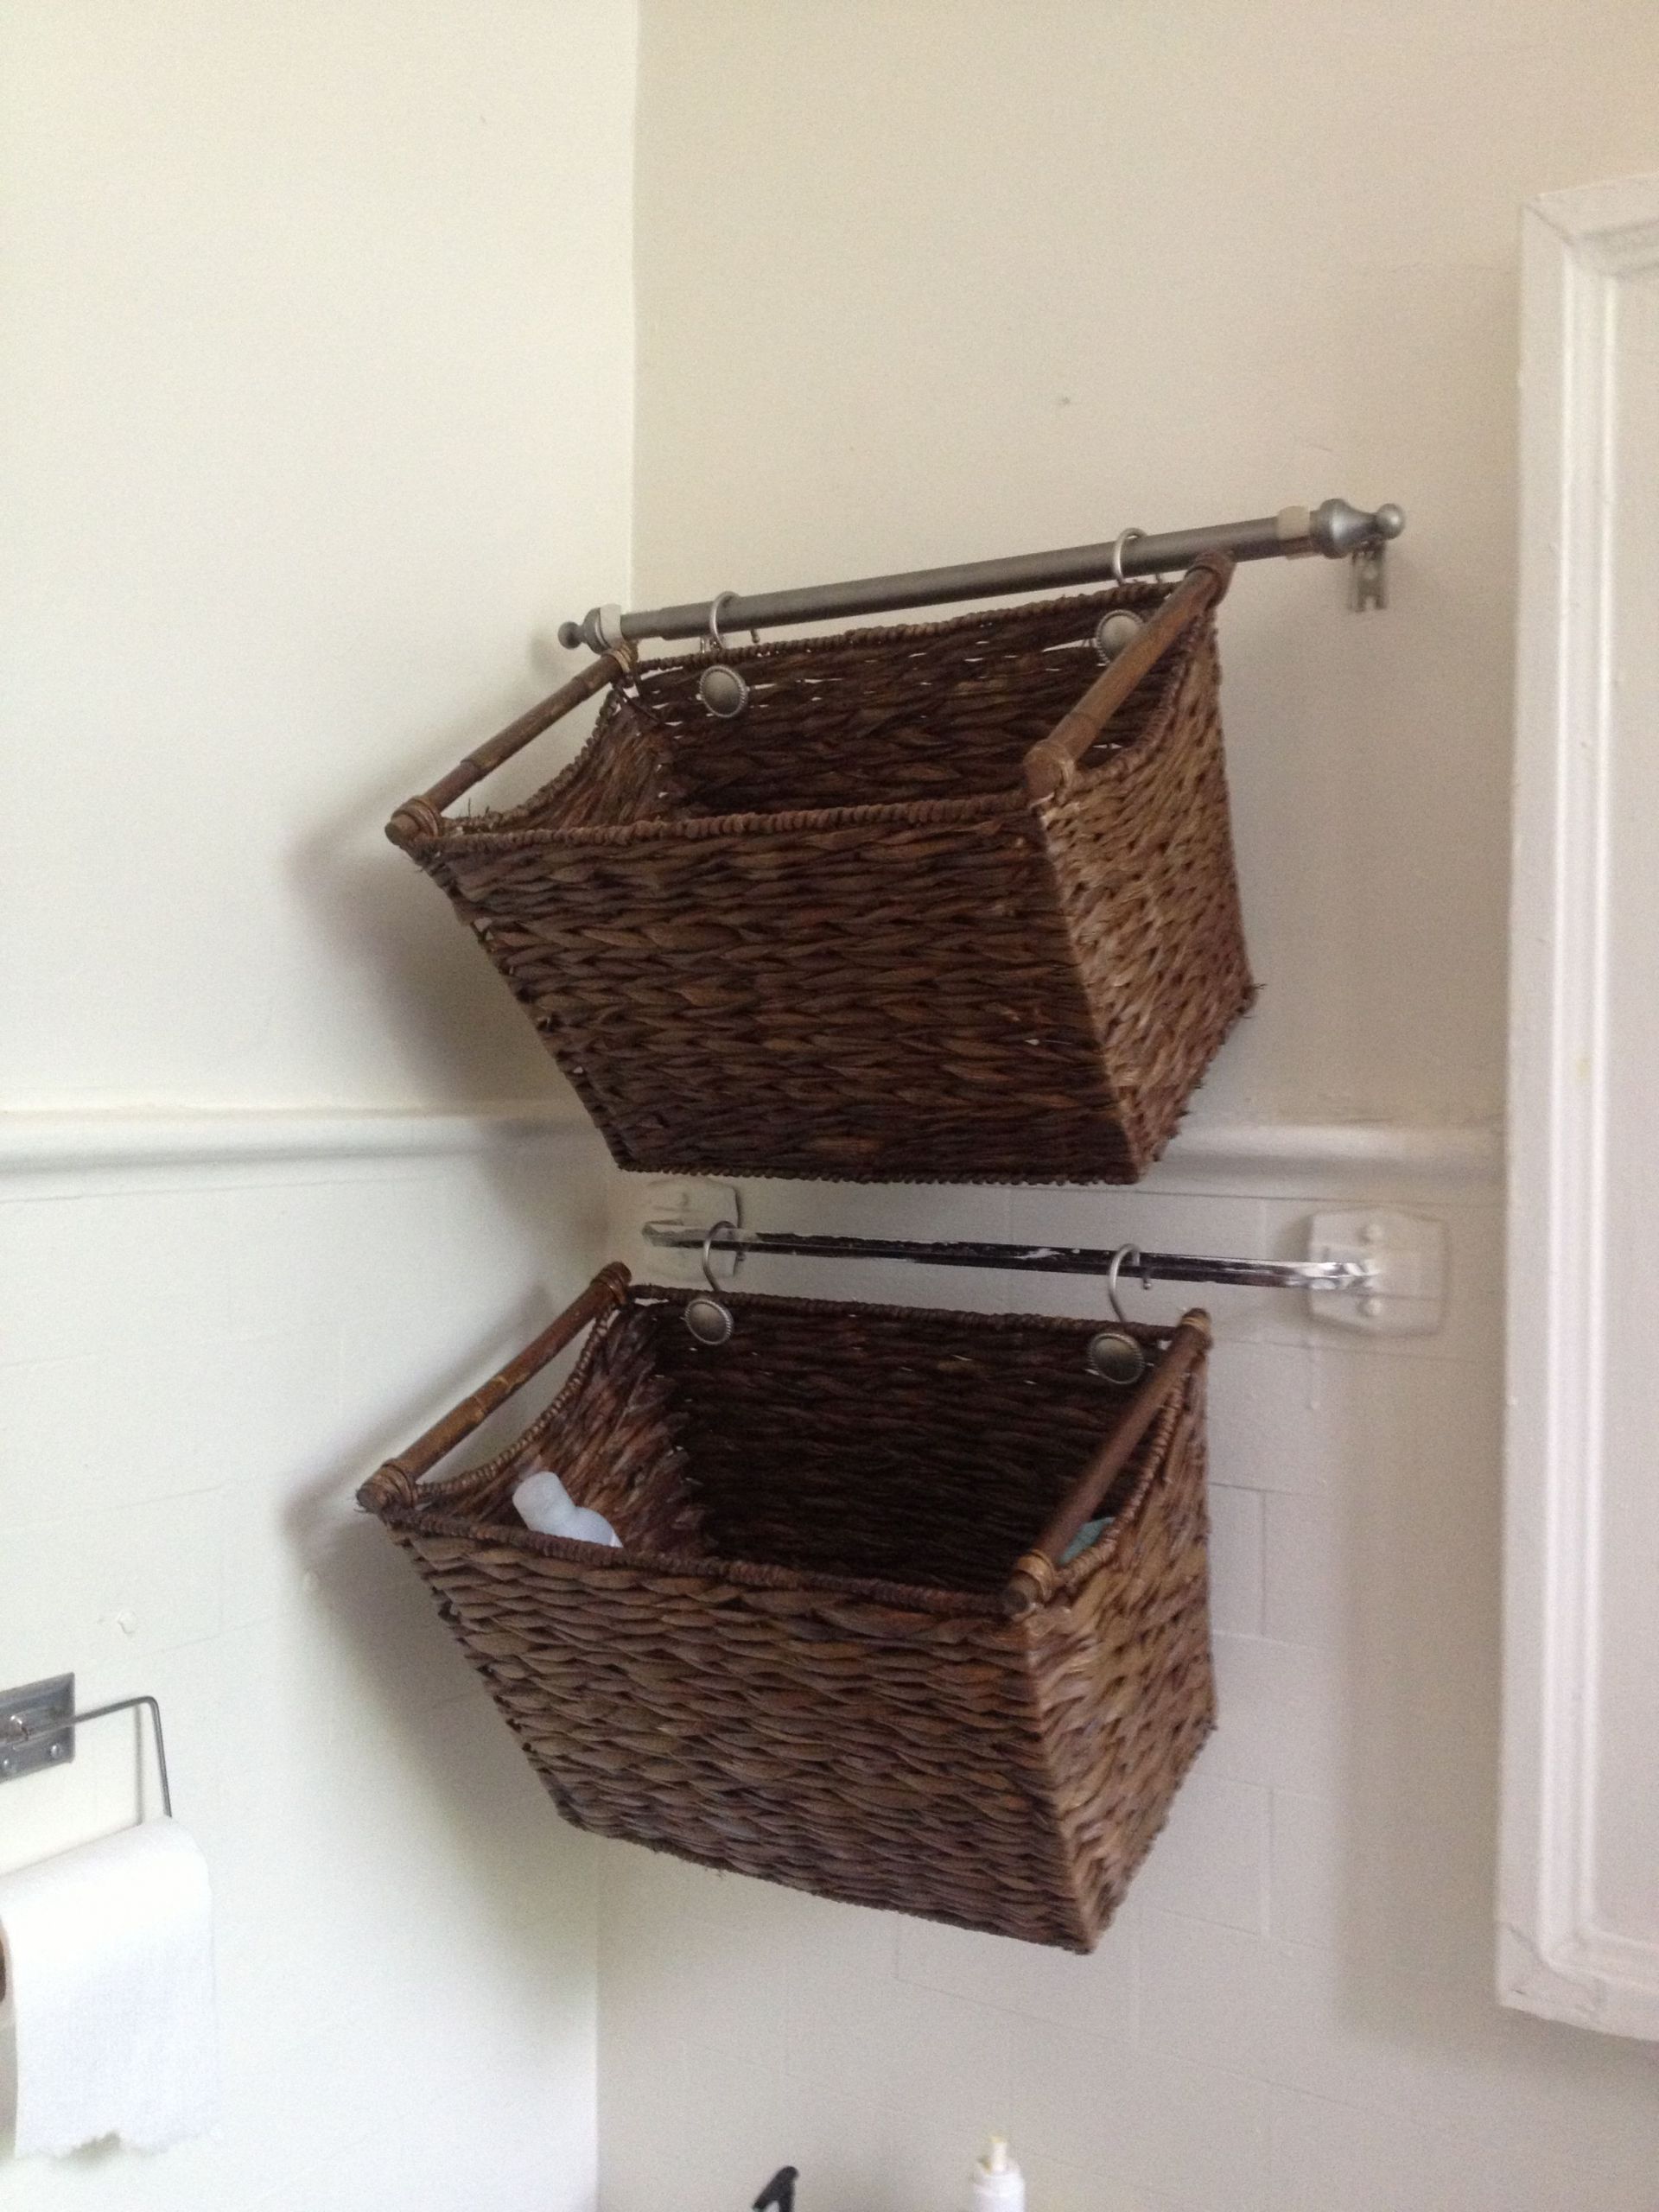 Bathroom Wall Baskets
 Cut down a curtain rod and hang wicker baskets for cute